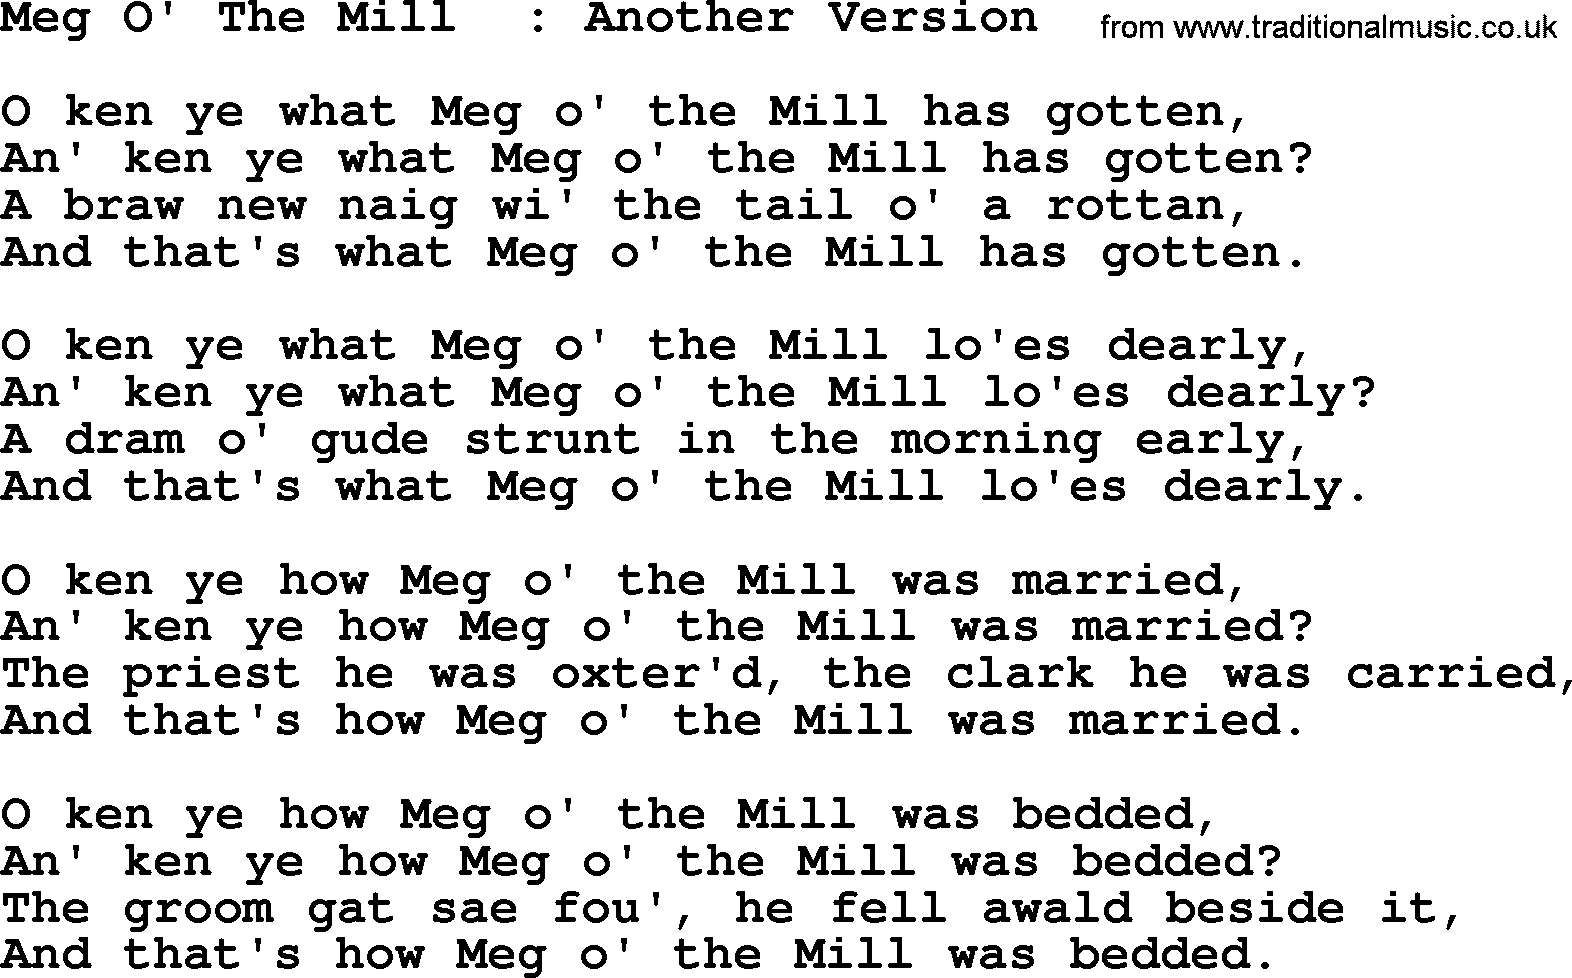 Robert Burns Songs & Lyrics: Meg O' The Mill Another Version